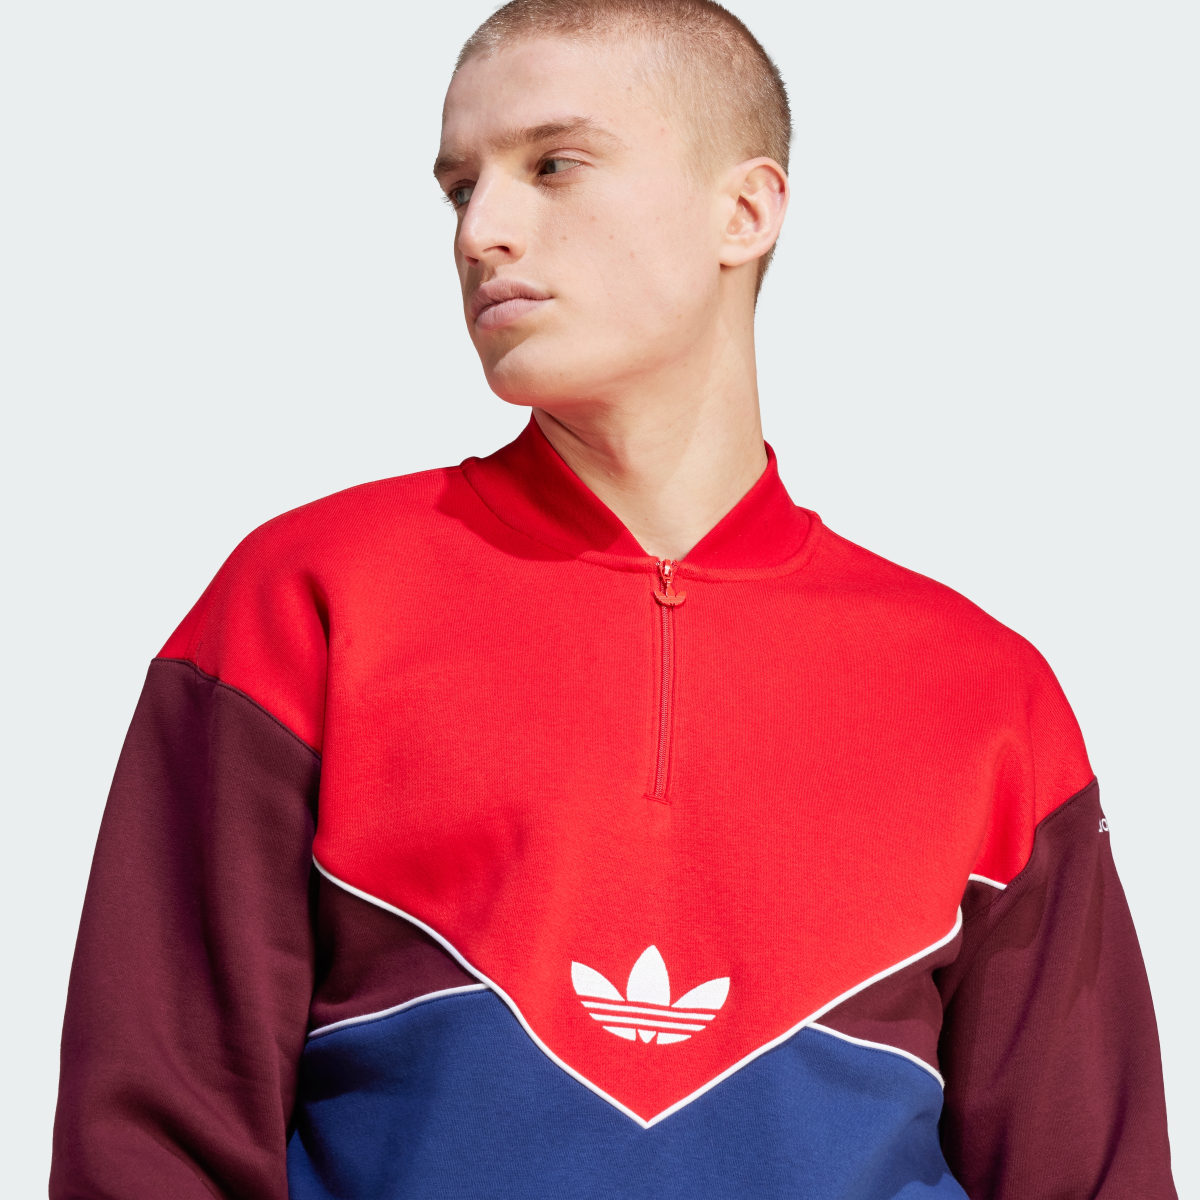 Adidas Adicolor Seasonal Archive Half-Zip Crew Sweatshirt. 6